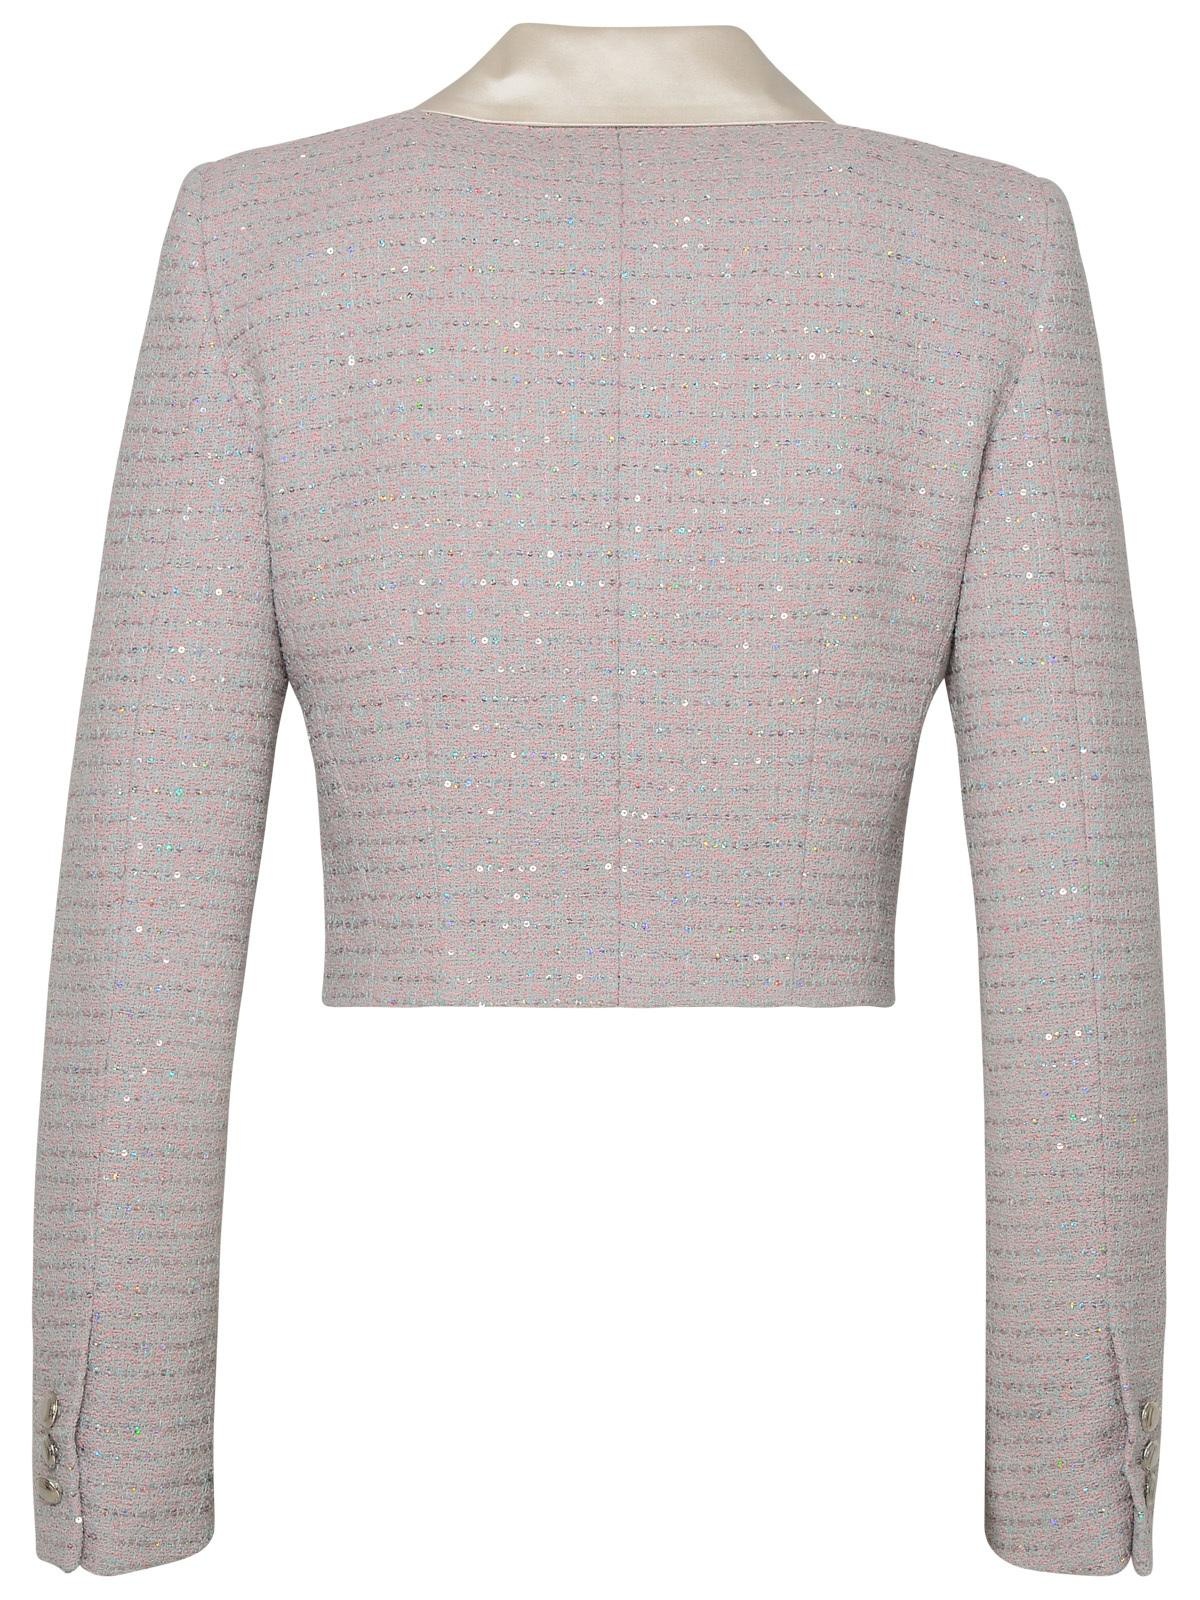 Alessandra Rich Pink Cotton Blend Jacket - 3